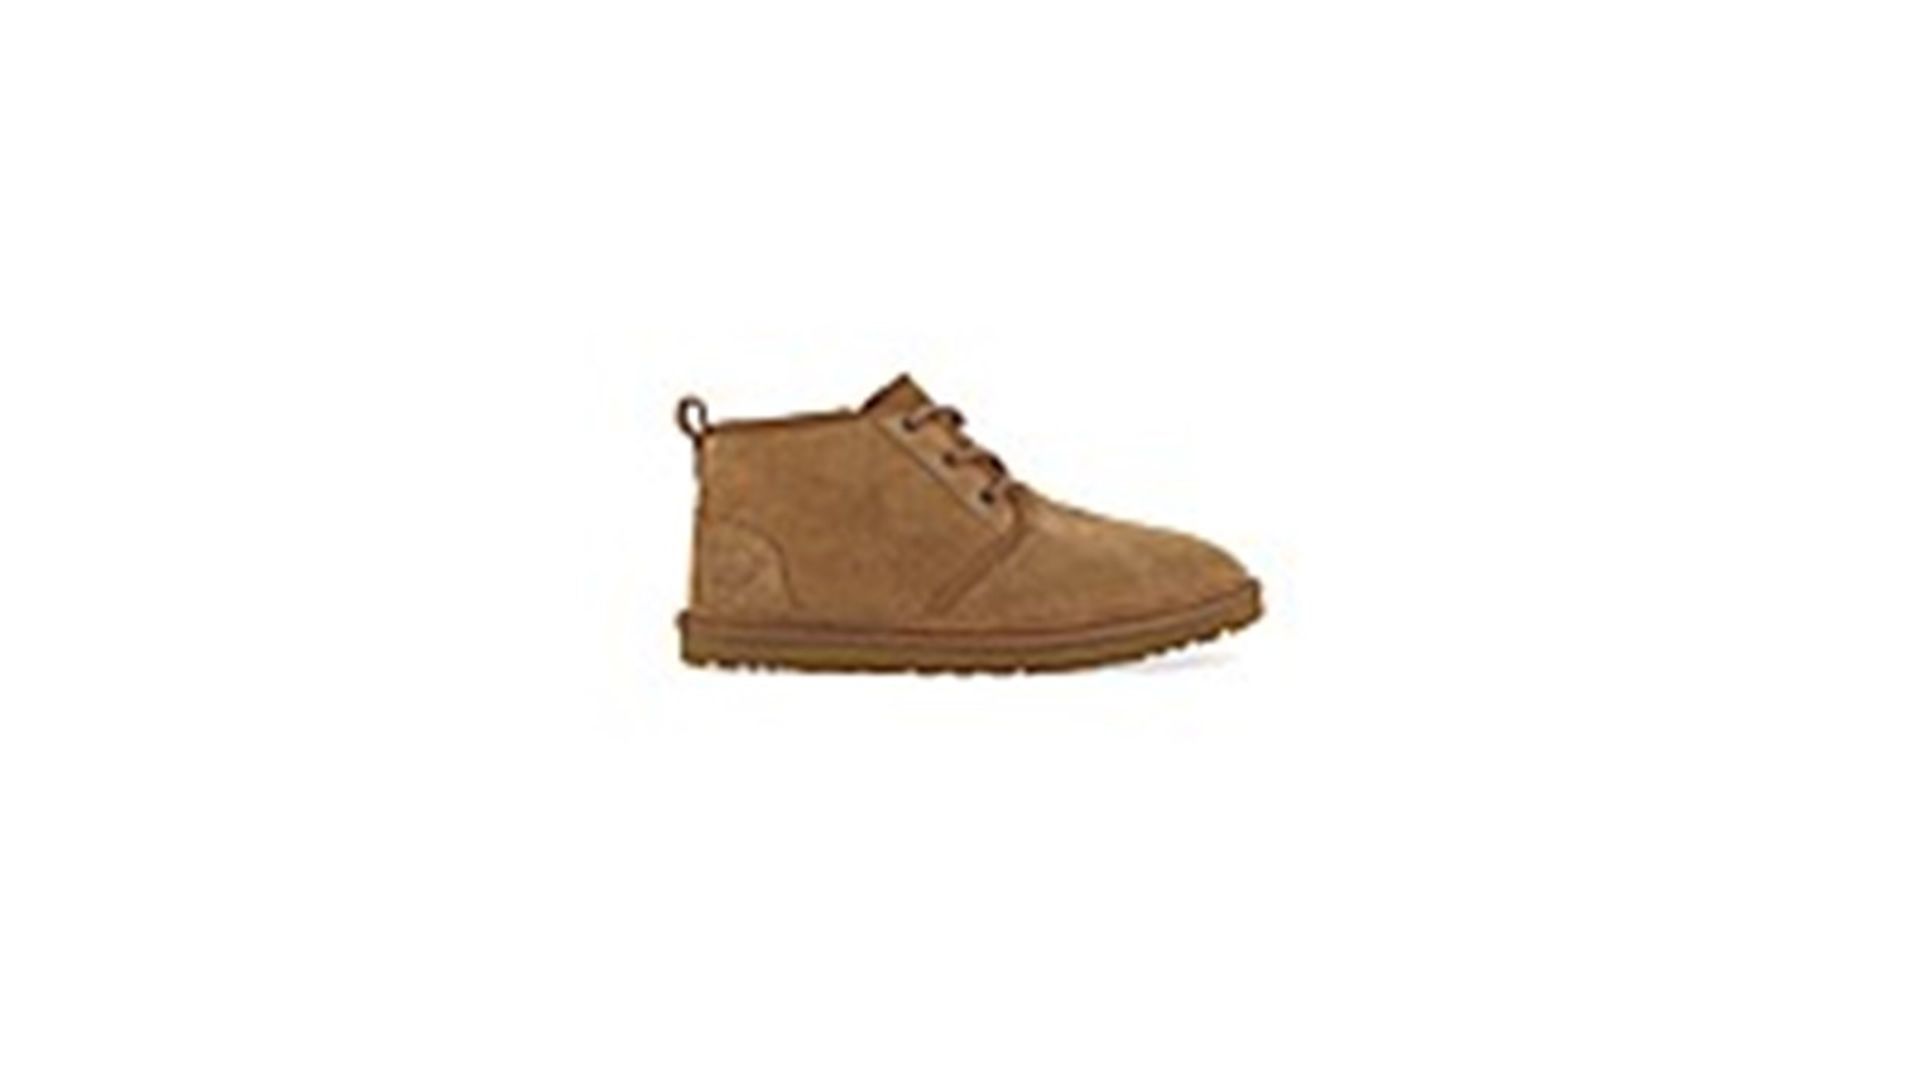 + VAT Brand New Pair Gents UGG Neumel Boots Chestnut Size 14